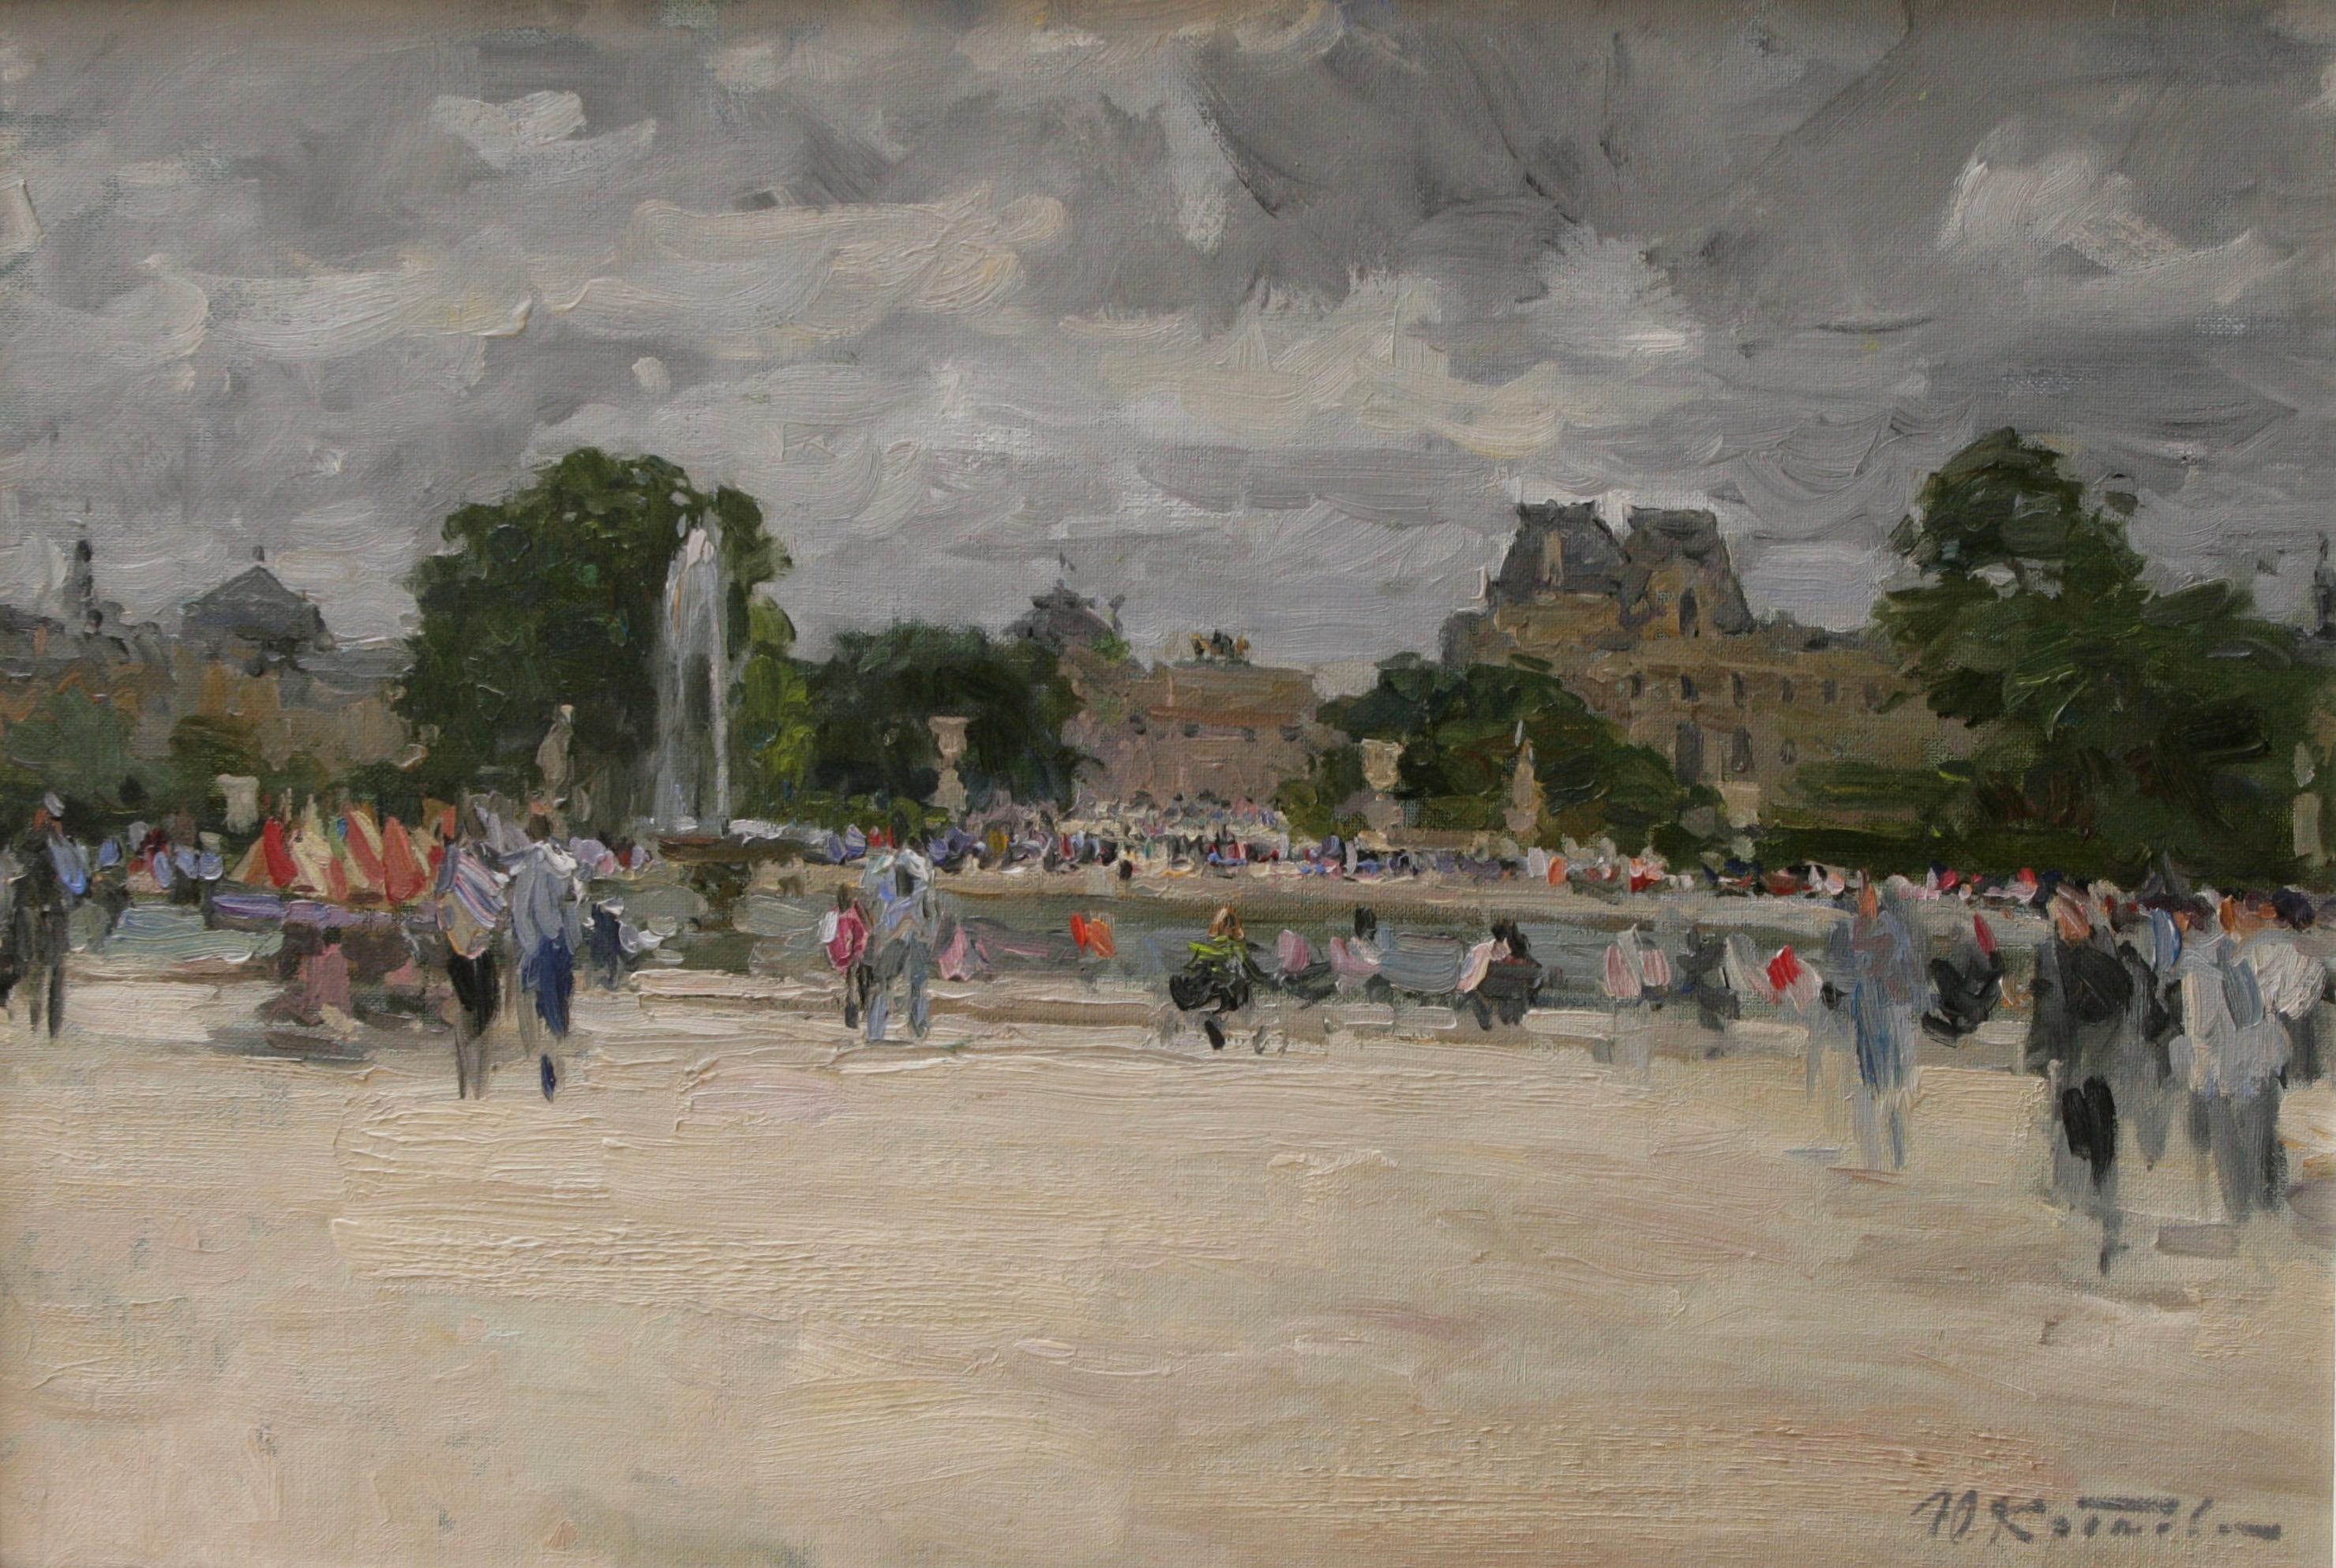 THE ROUND POND TUILLERRIES PARIS. YURI KROTOV  L'ARTISTE RUSSIAN CONTEMPORAIN - Post-impressionnisme Painting par Yuri Krotov